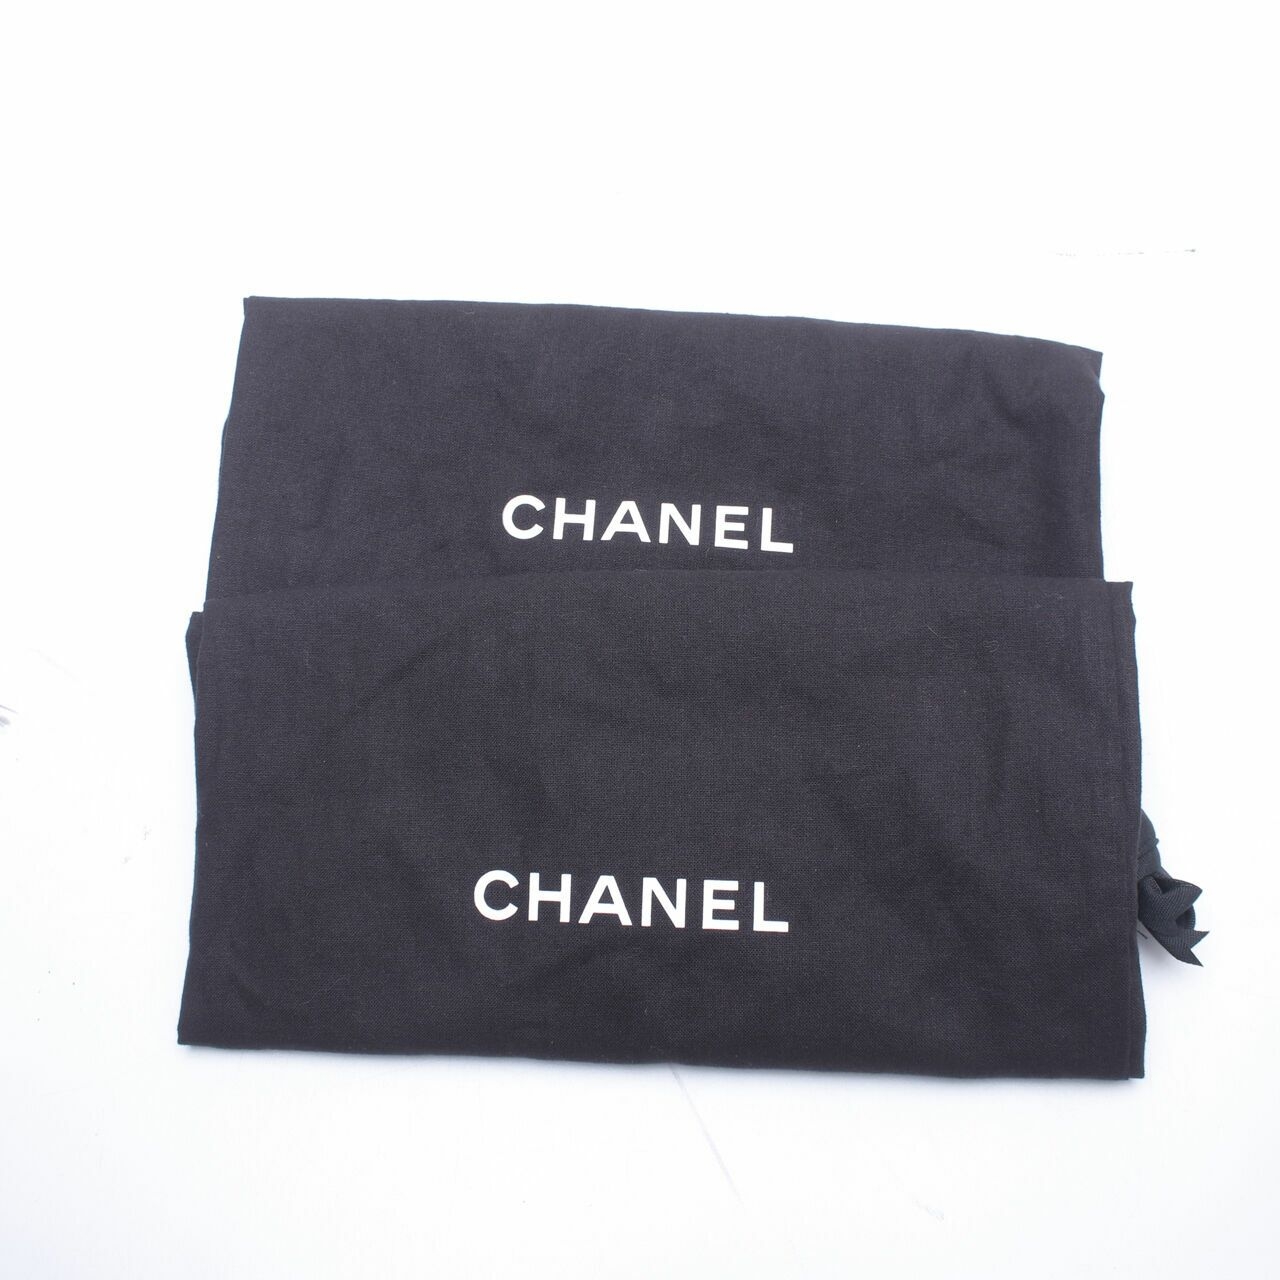 Chanel Black Wedges